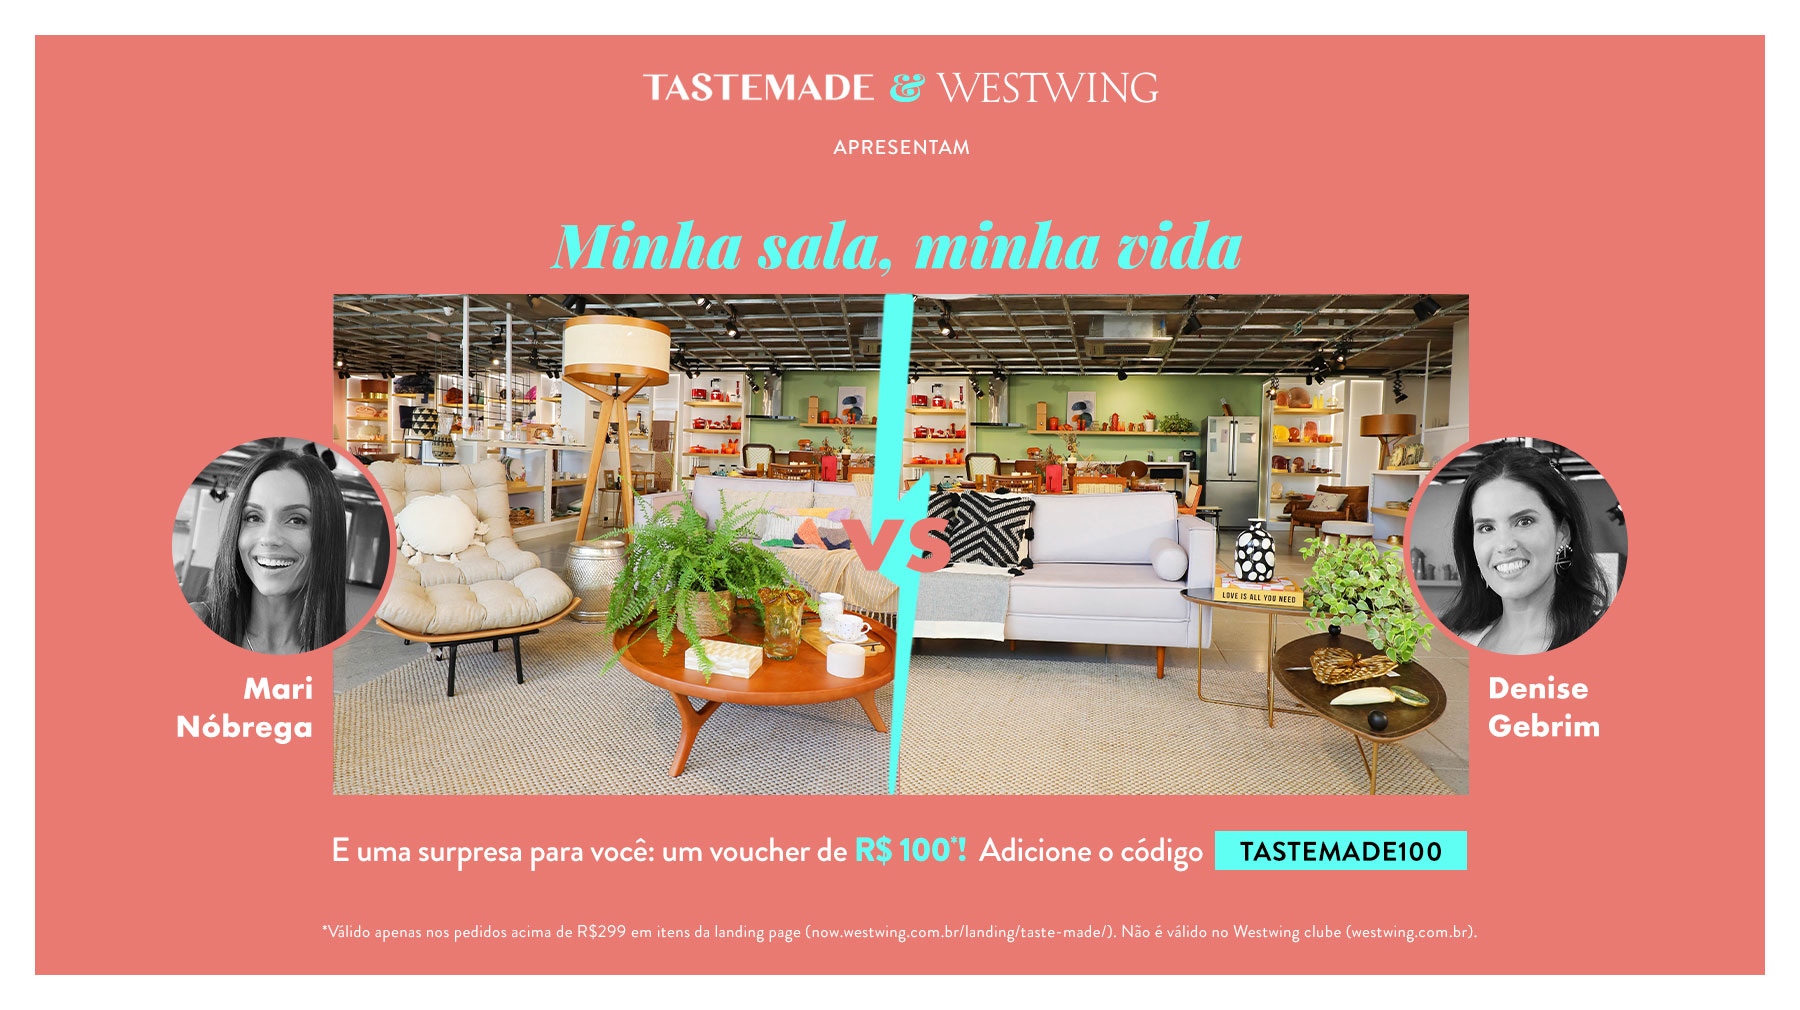 Tastemade & Westwing episódio 4 | WestwingNow